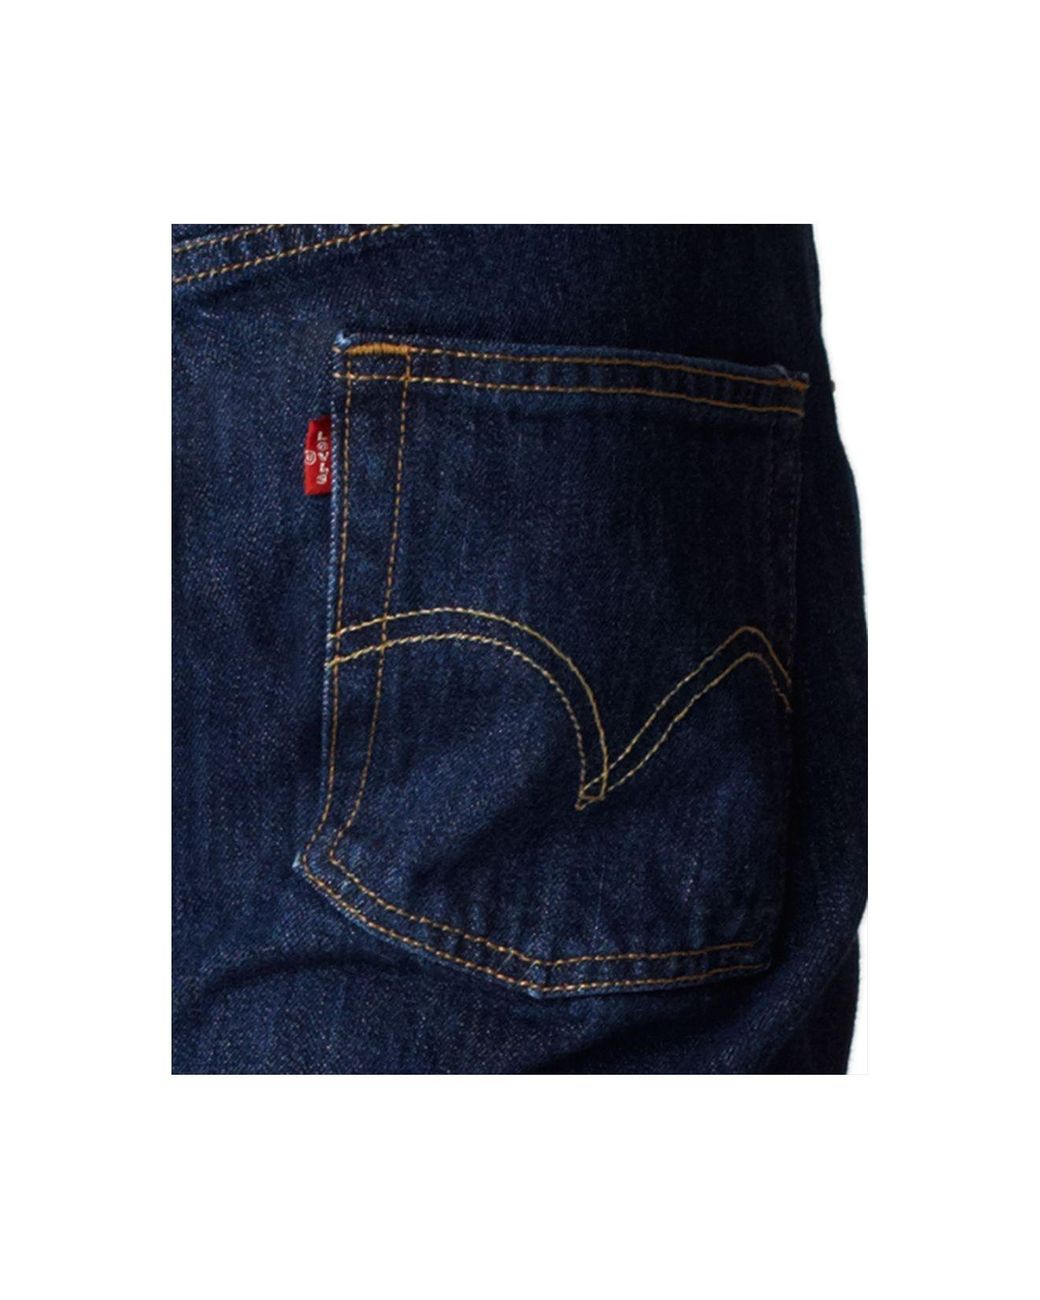 levi's non stretch mens jeans